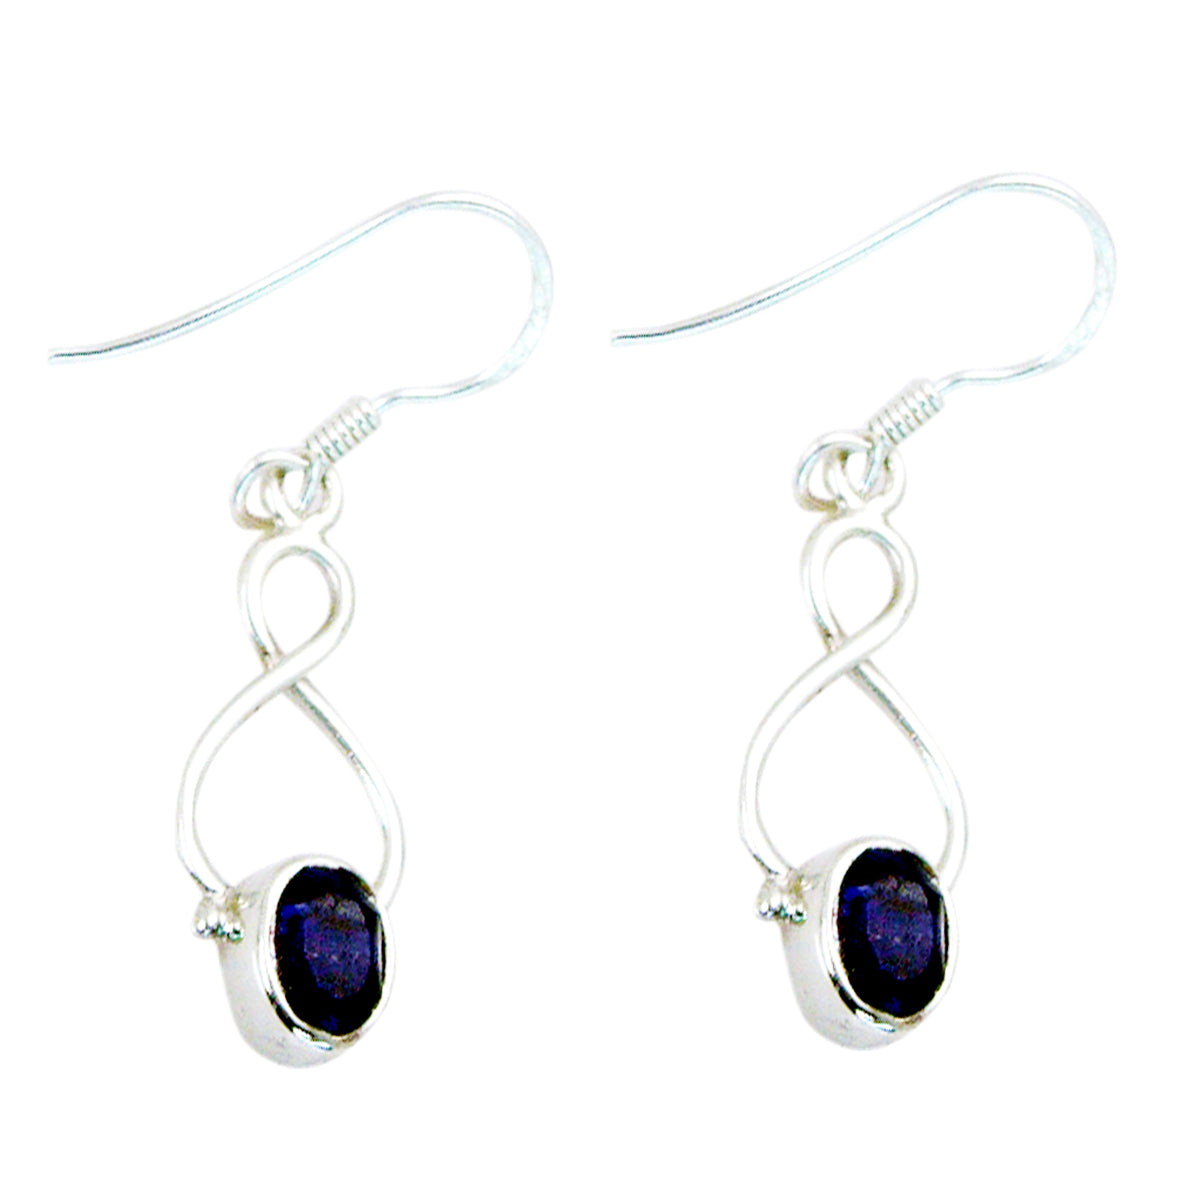 Riyo Nice Gemstone oval Faceted Nevy Blue Lapis Lazuli Silver Earrings good Friday gift